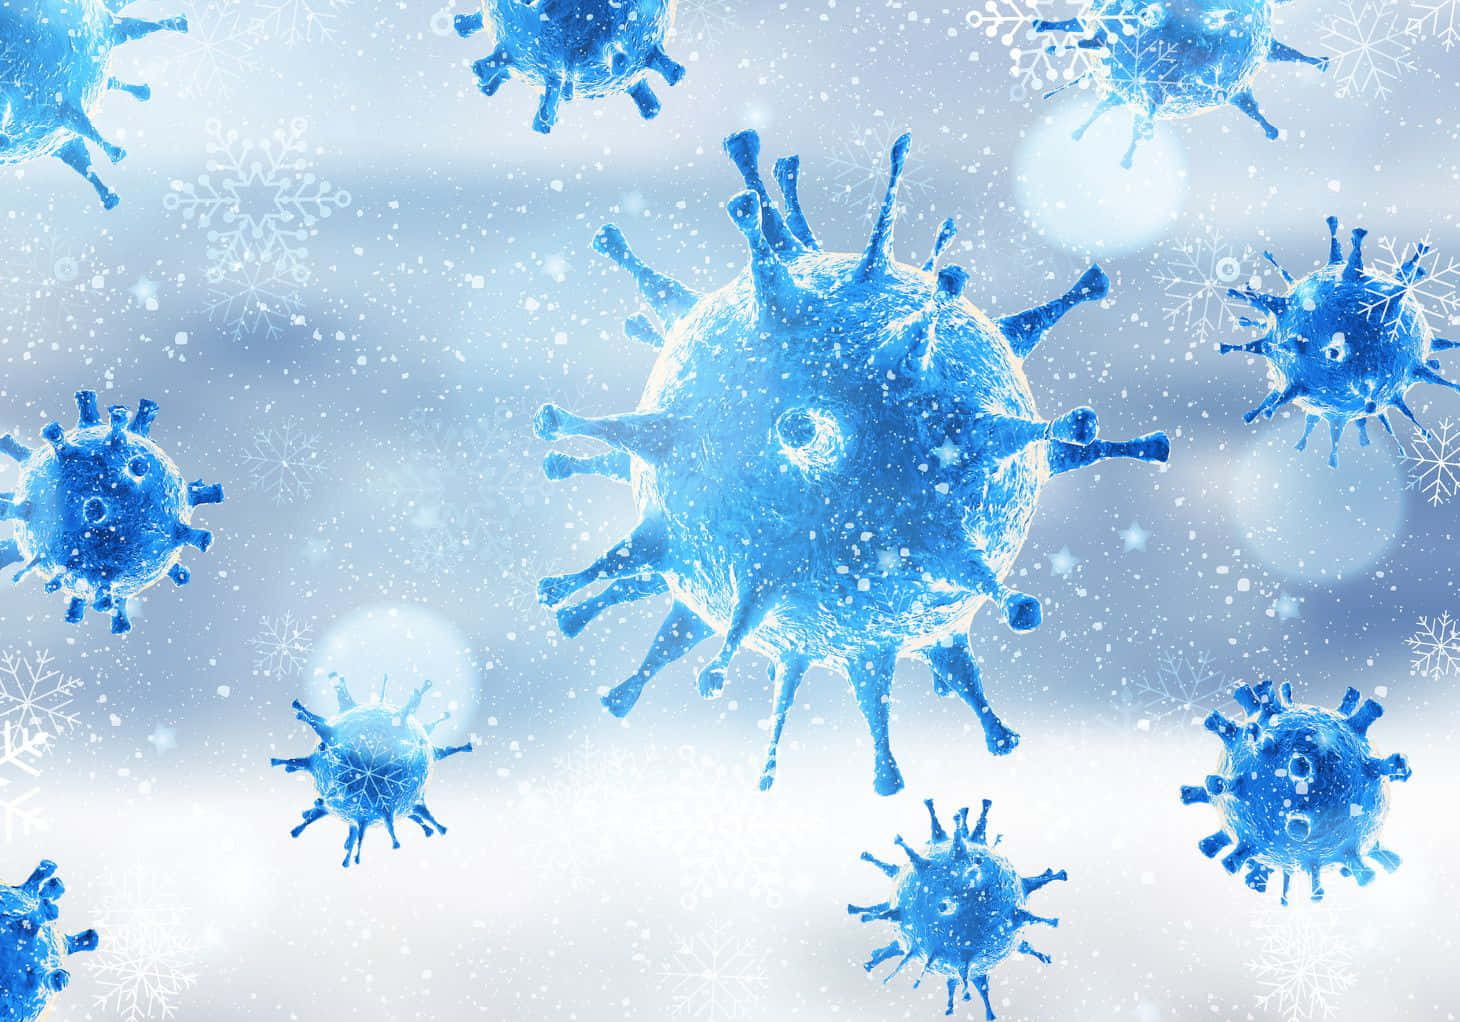 Coronaviruses In The Snow